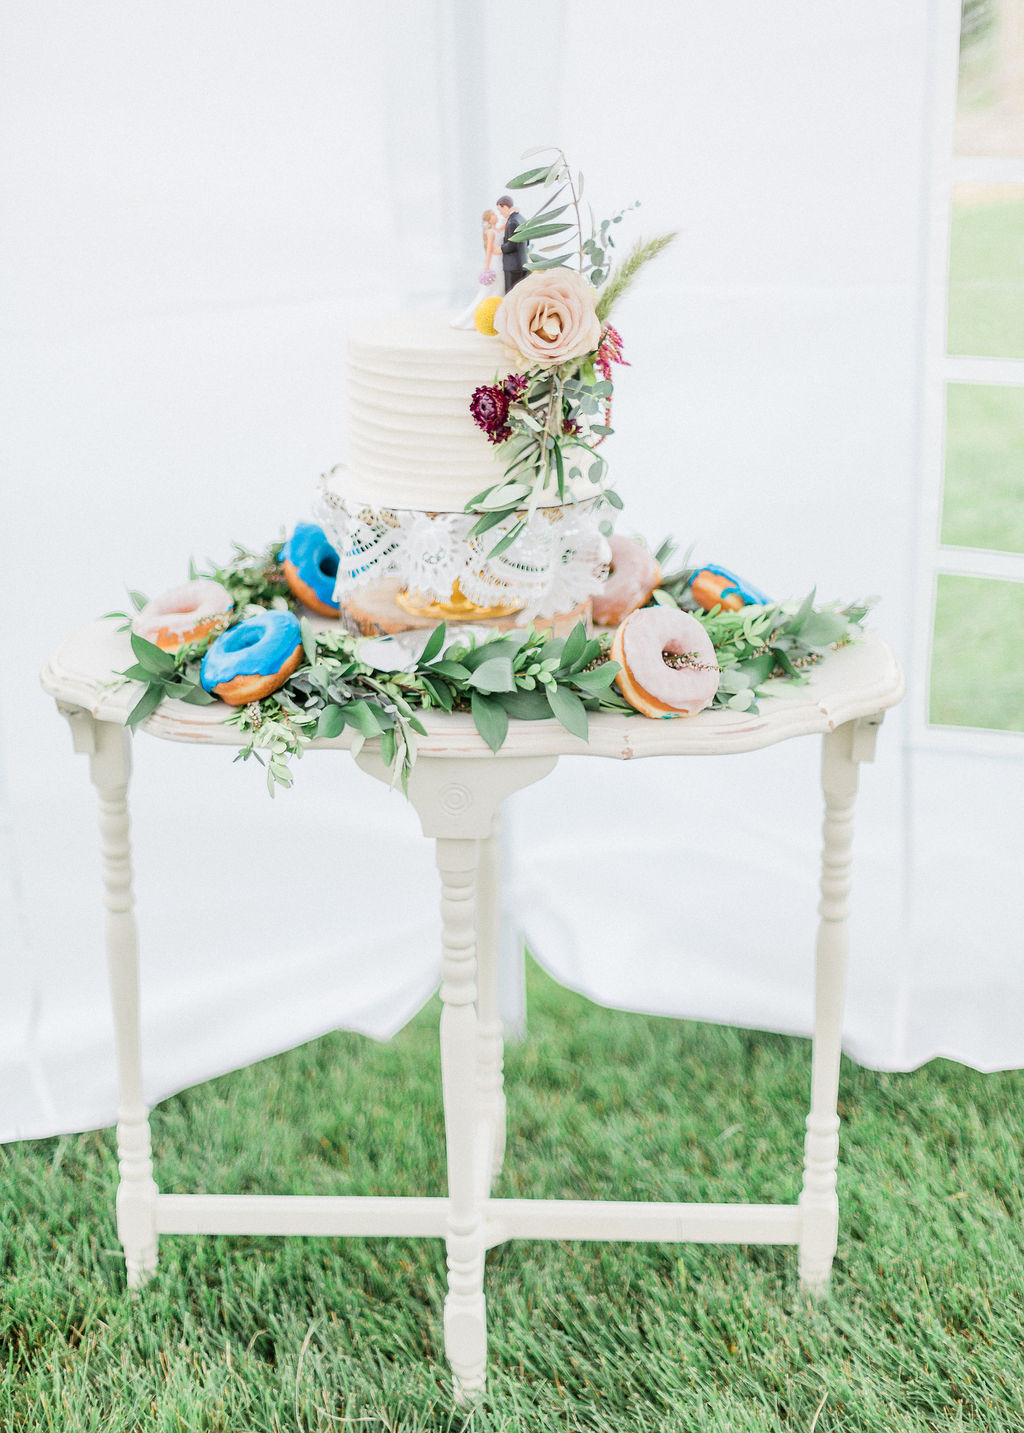 Intimate wild flower wedding - wedding cake, donuts, tent wedding